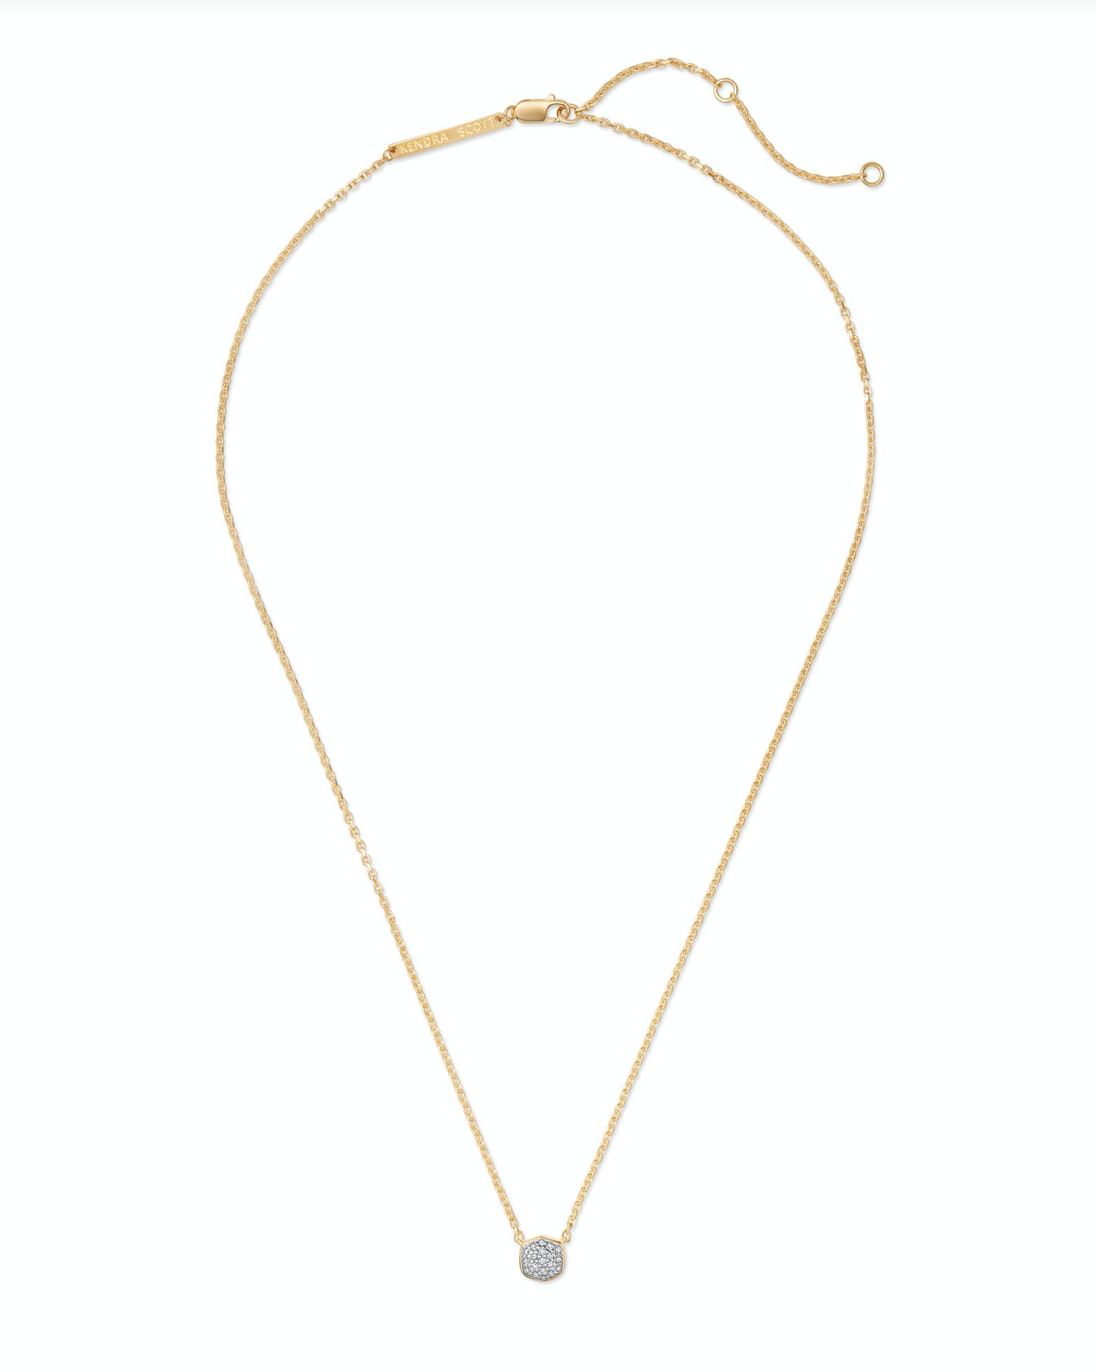 Davie Pave Pendant Necklace in 18k Gold Diamond